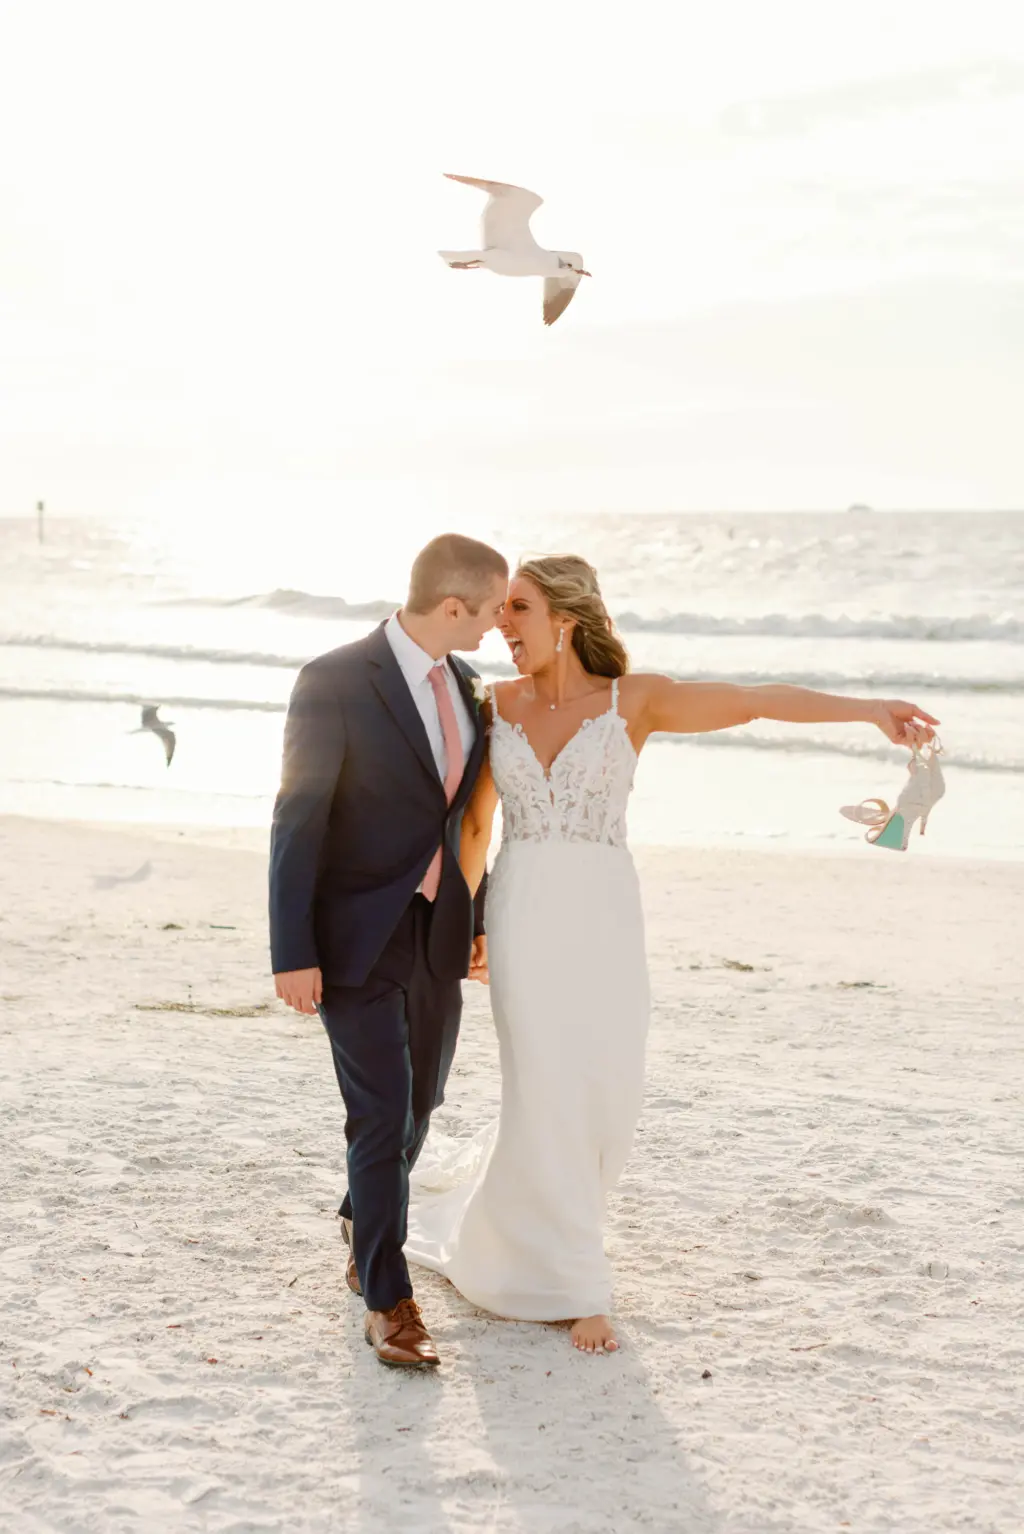 Bride and Groom Beach Wedding Portrait Inspiration